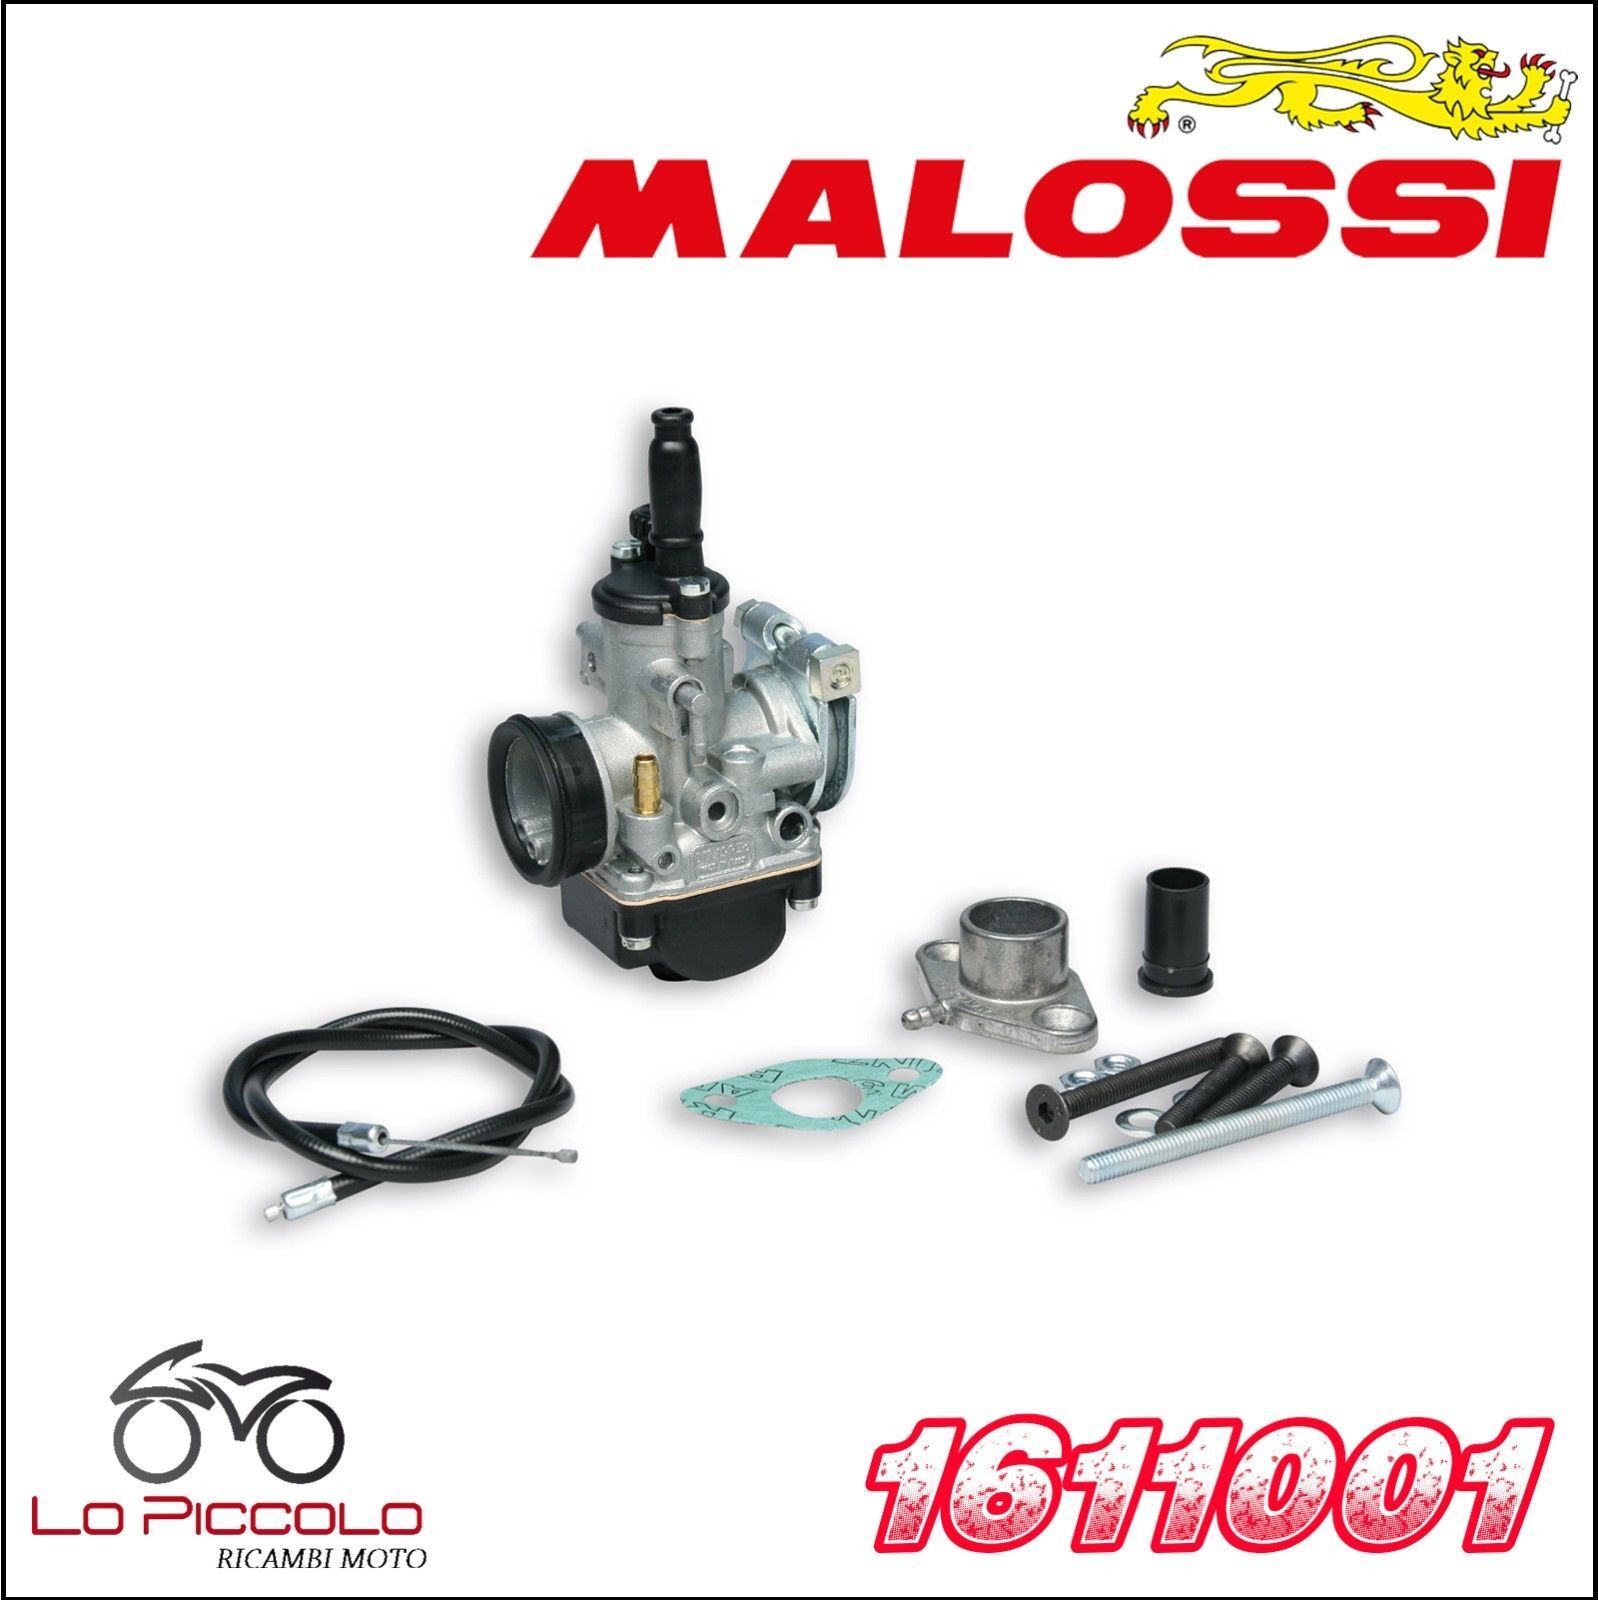 1611001 Carburettor Complete Free shipping MALOSSI Phbg 19 Honda Super-cheap 2T 50 Sxr As